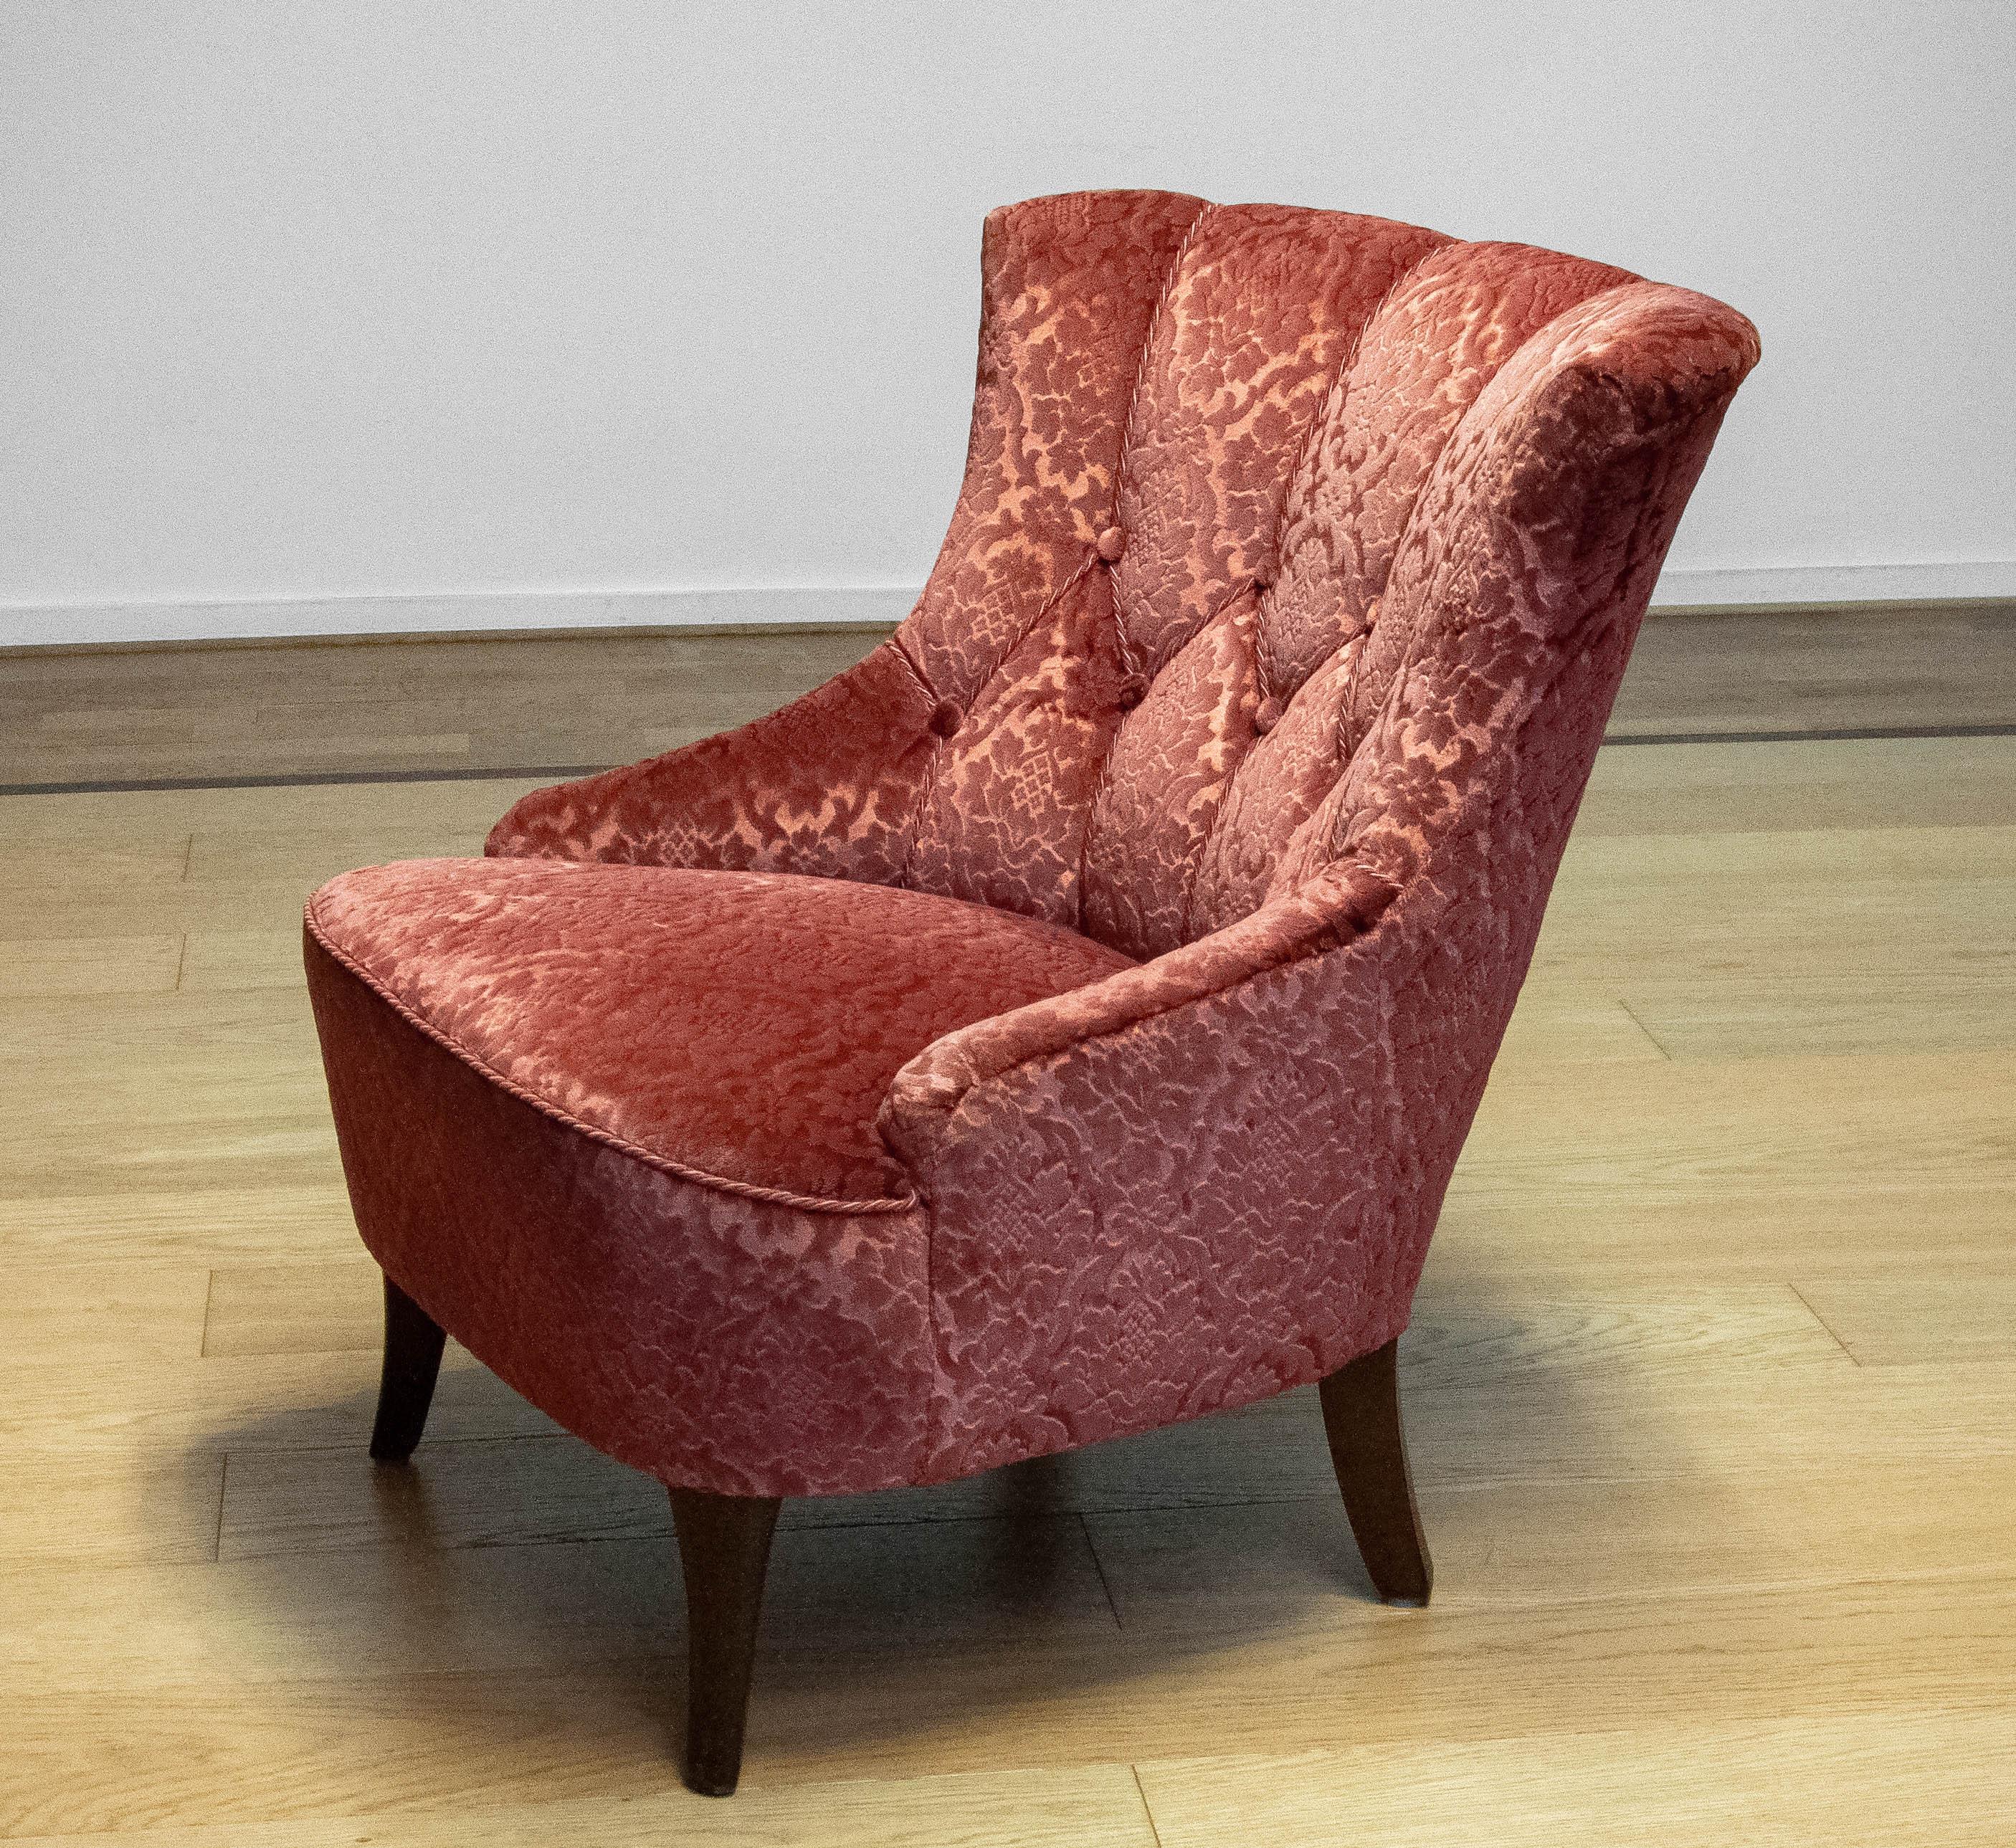 20th Century Napoleon III Slipper Chair In Brique Ton Sur Ton Jacquard Velvet For Sale 2